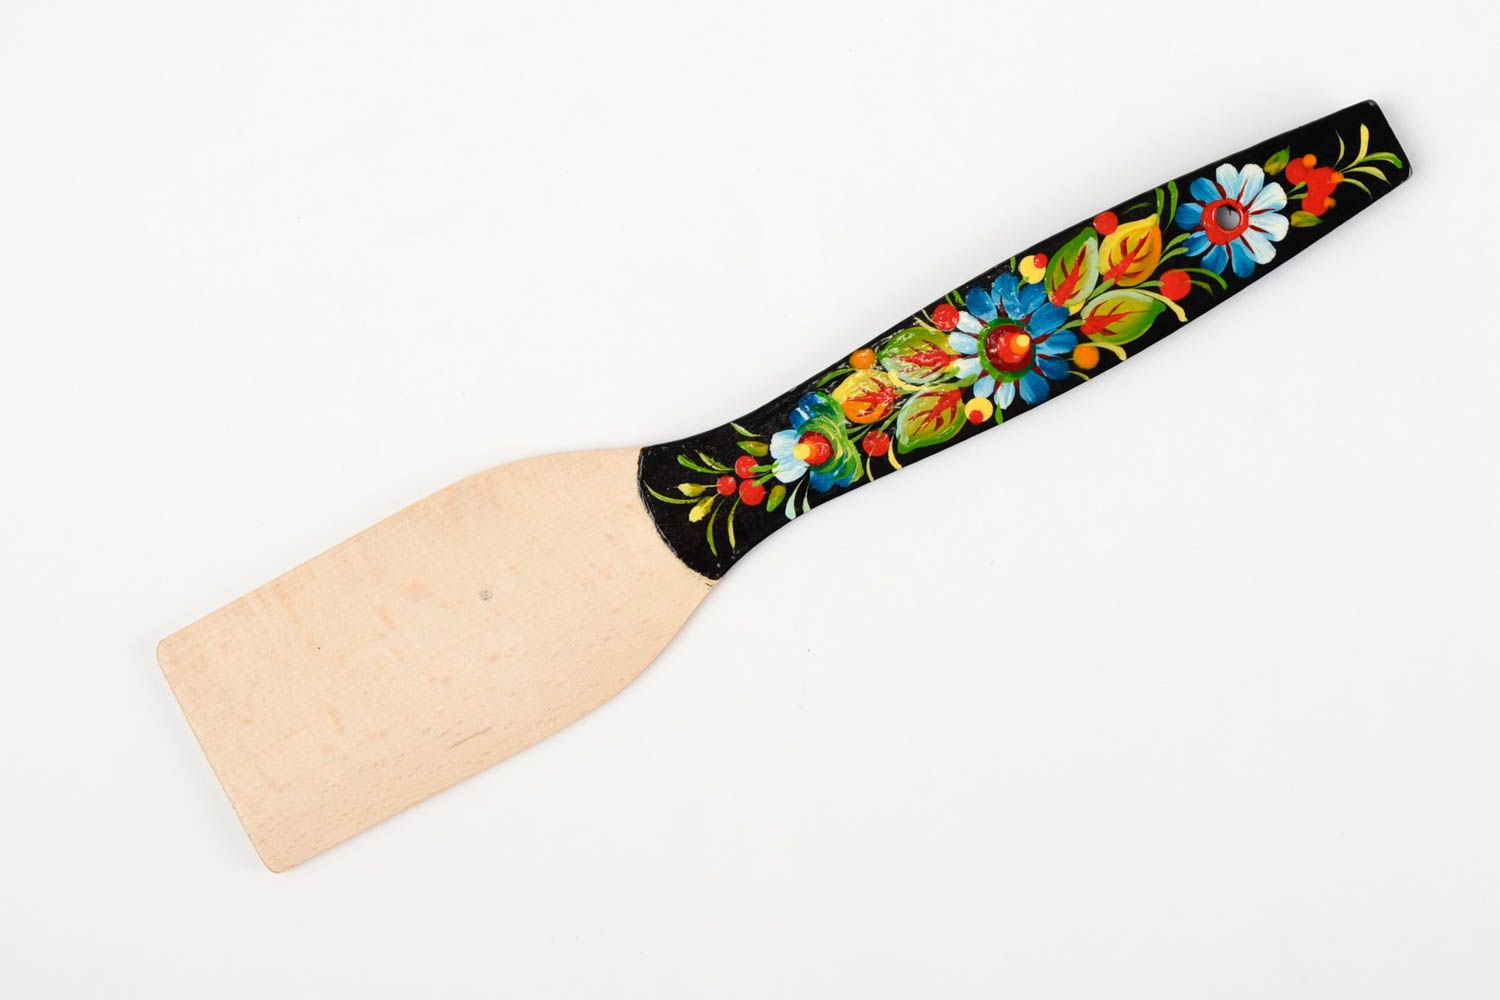 Handmade spatula designer spatula wooden kitchen utensils unusual gift ideas  photo 3